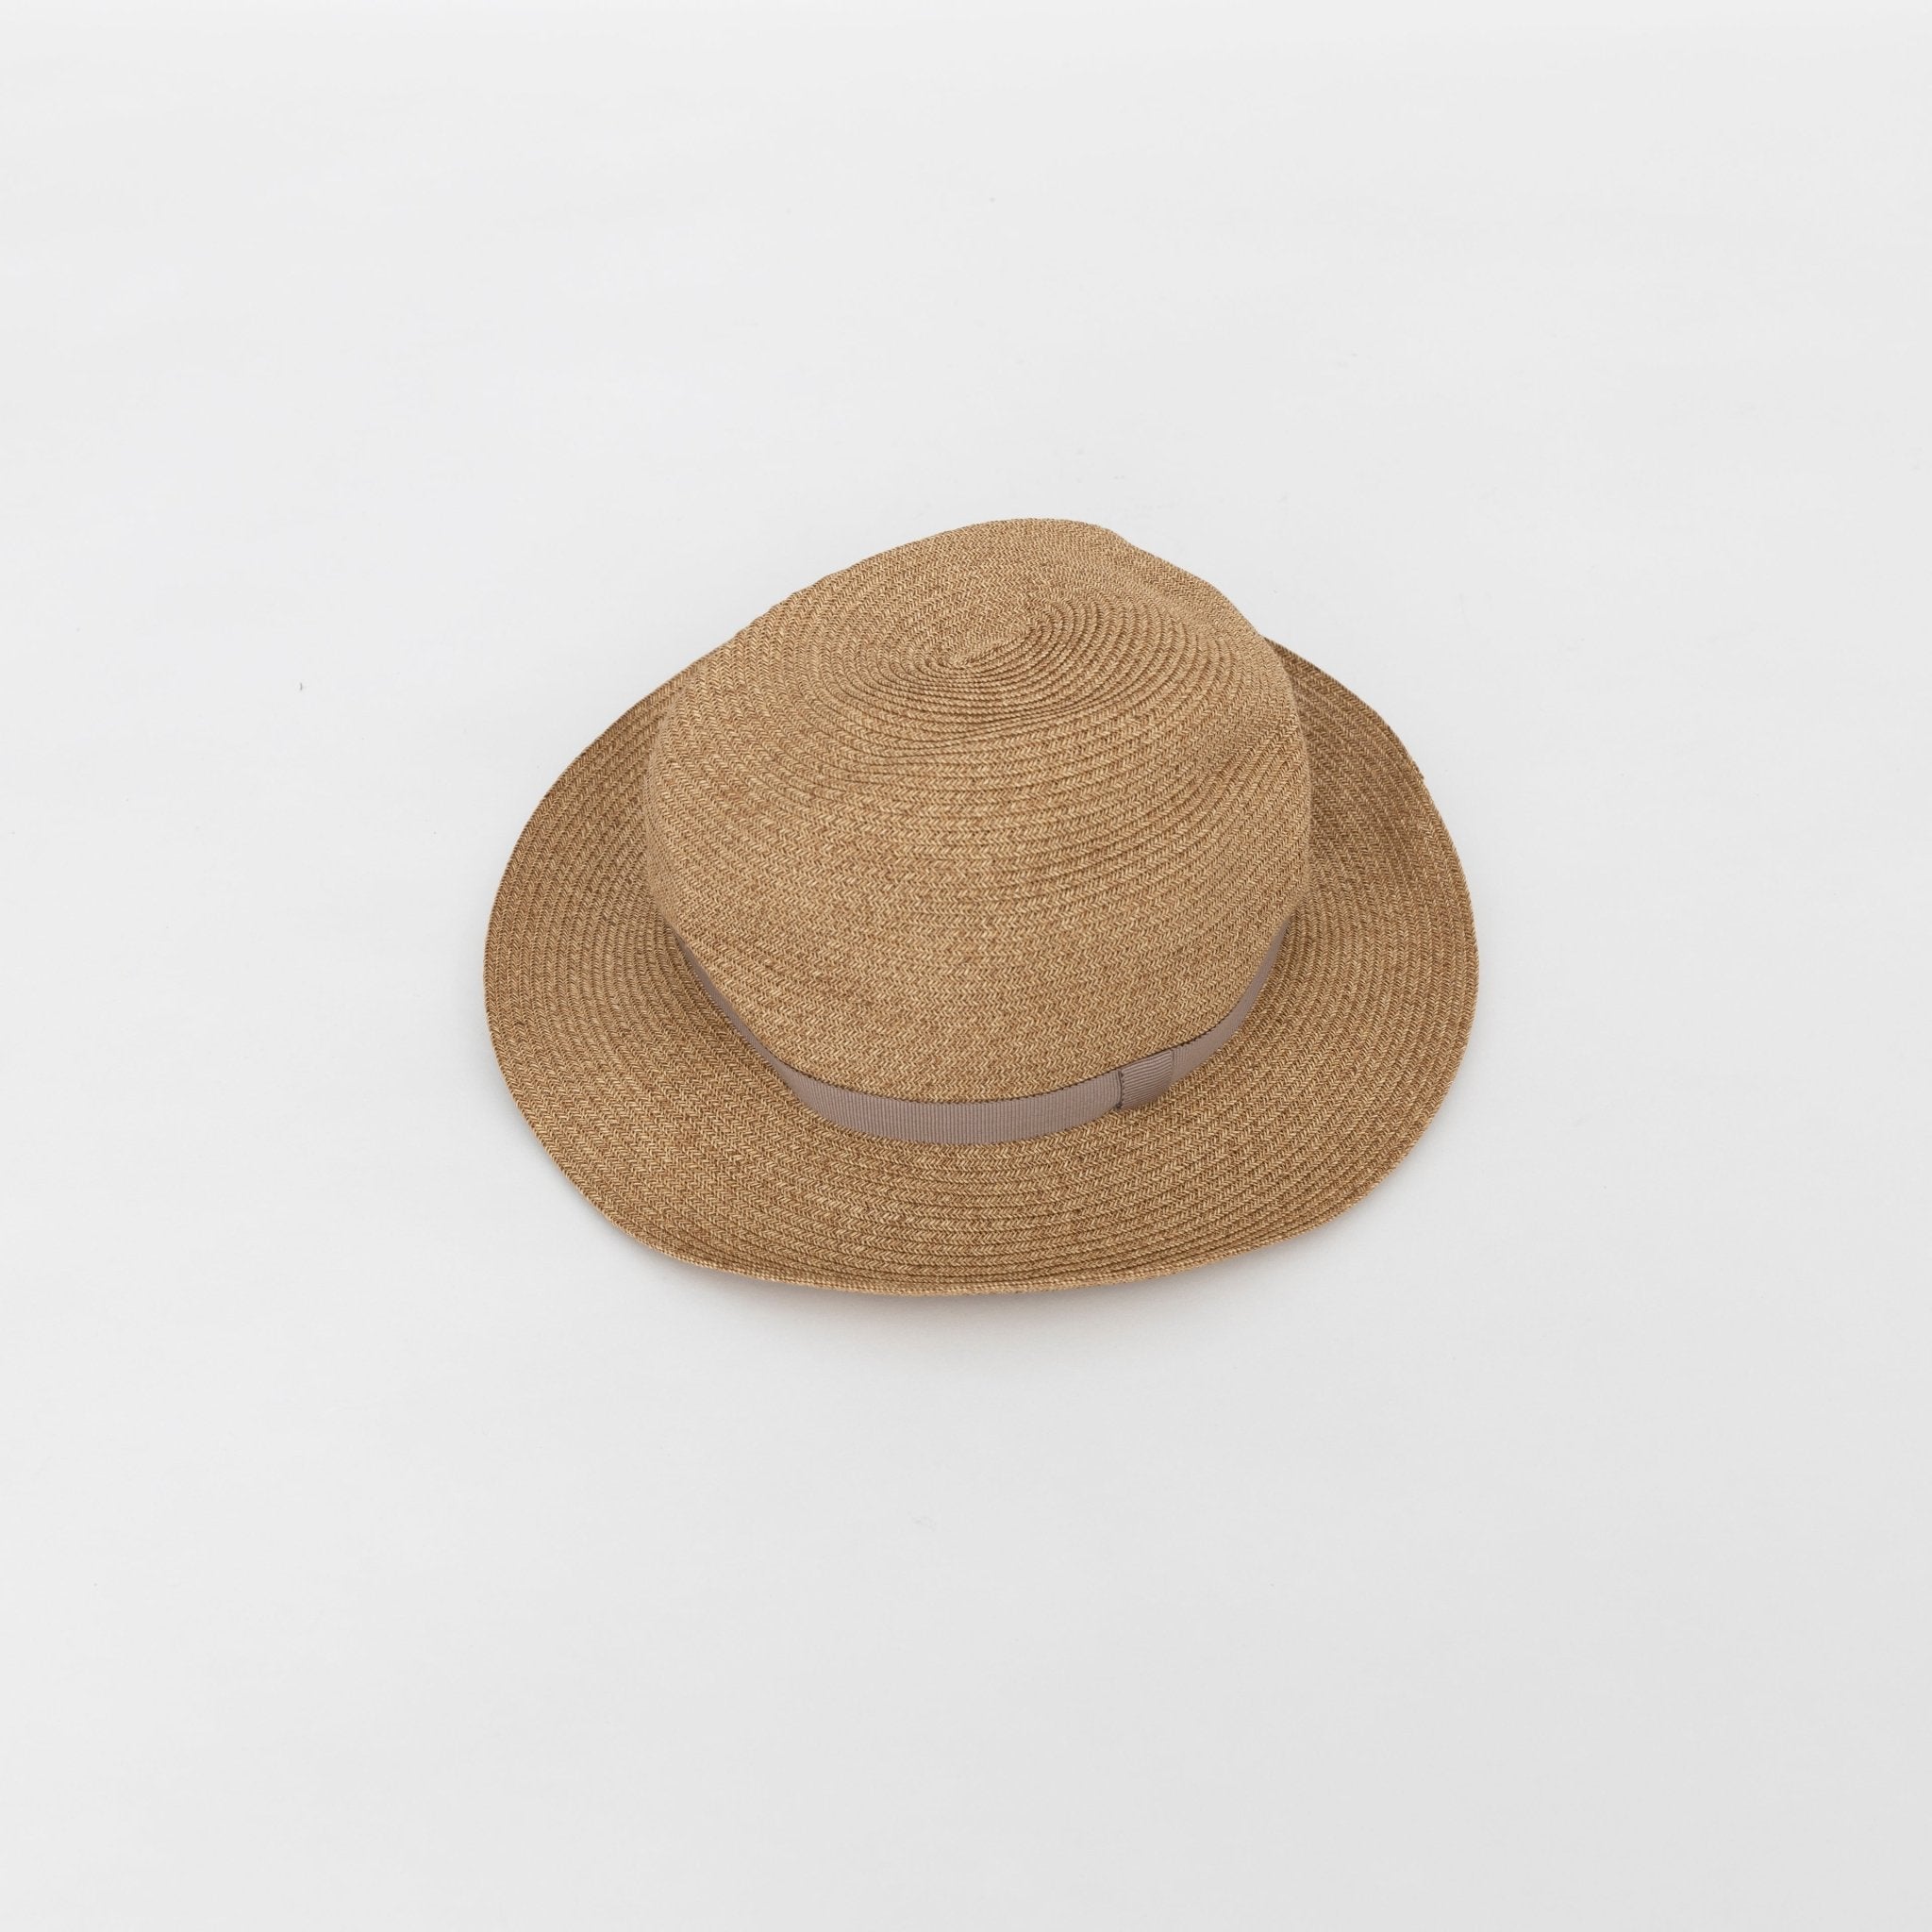 Mature HA Box Hat - 6.5 cm brim – tortoise general store